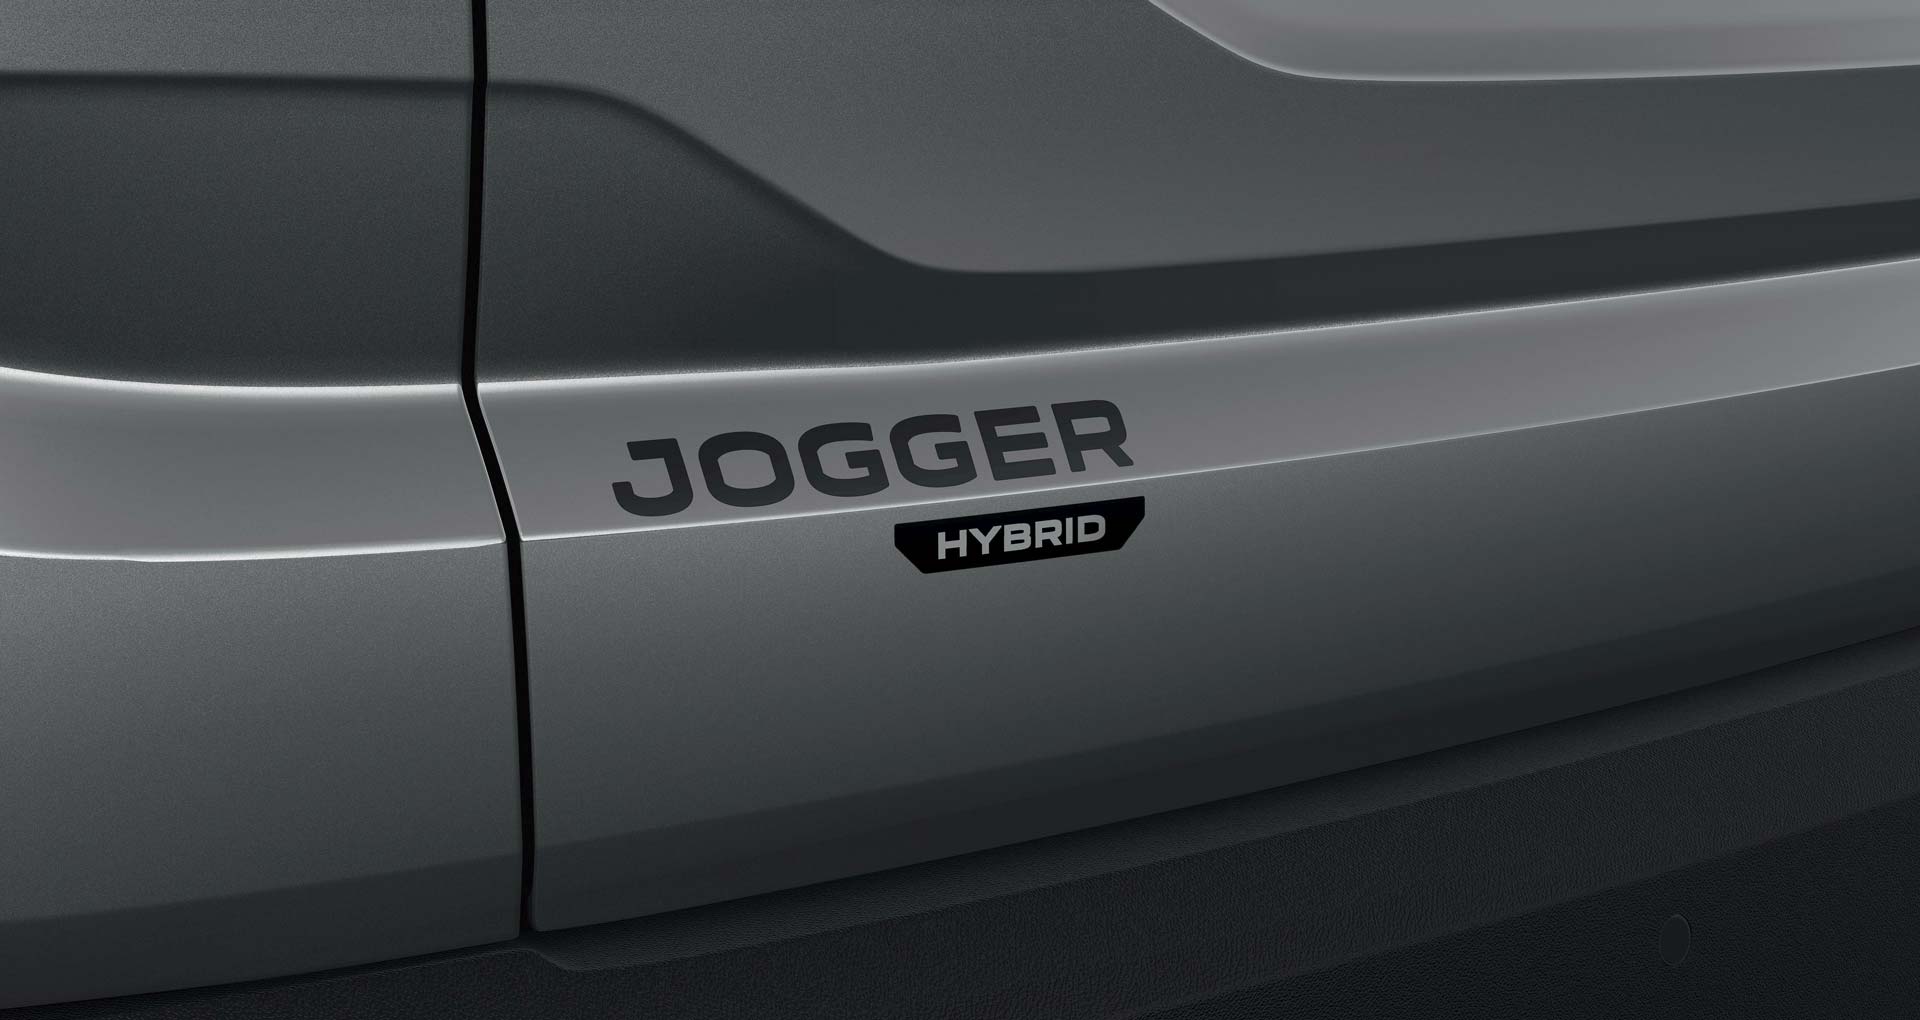 Jogger Hybrid